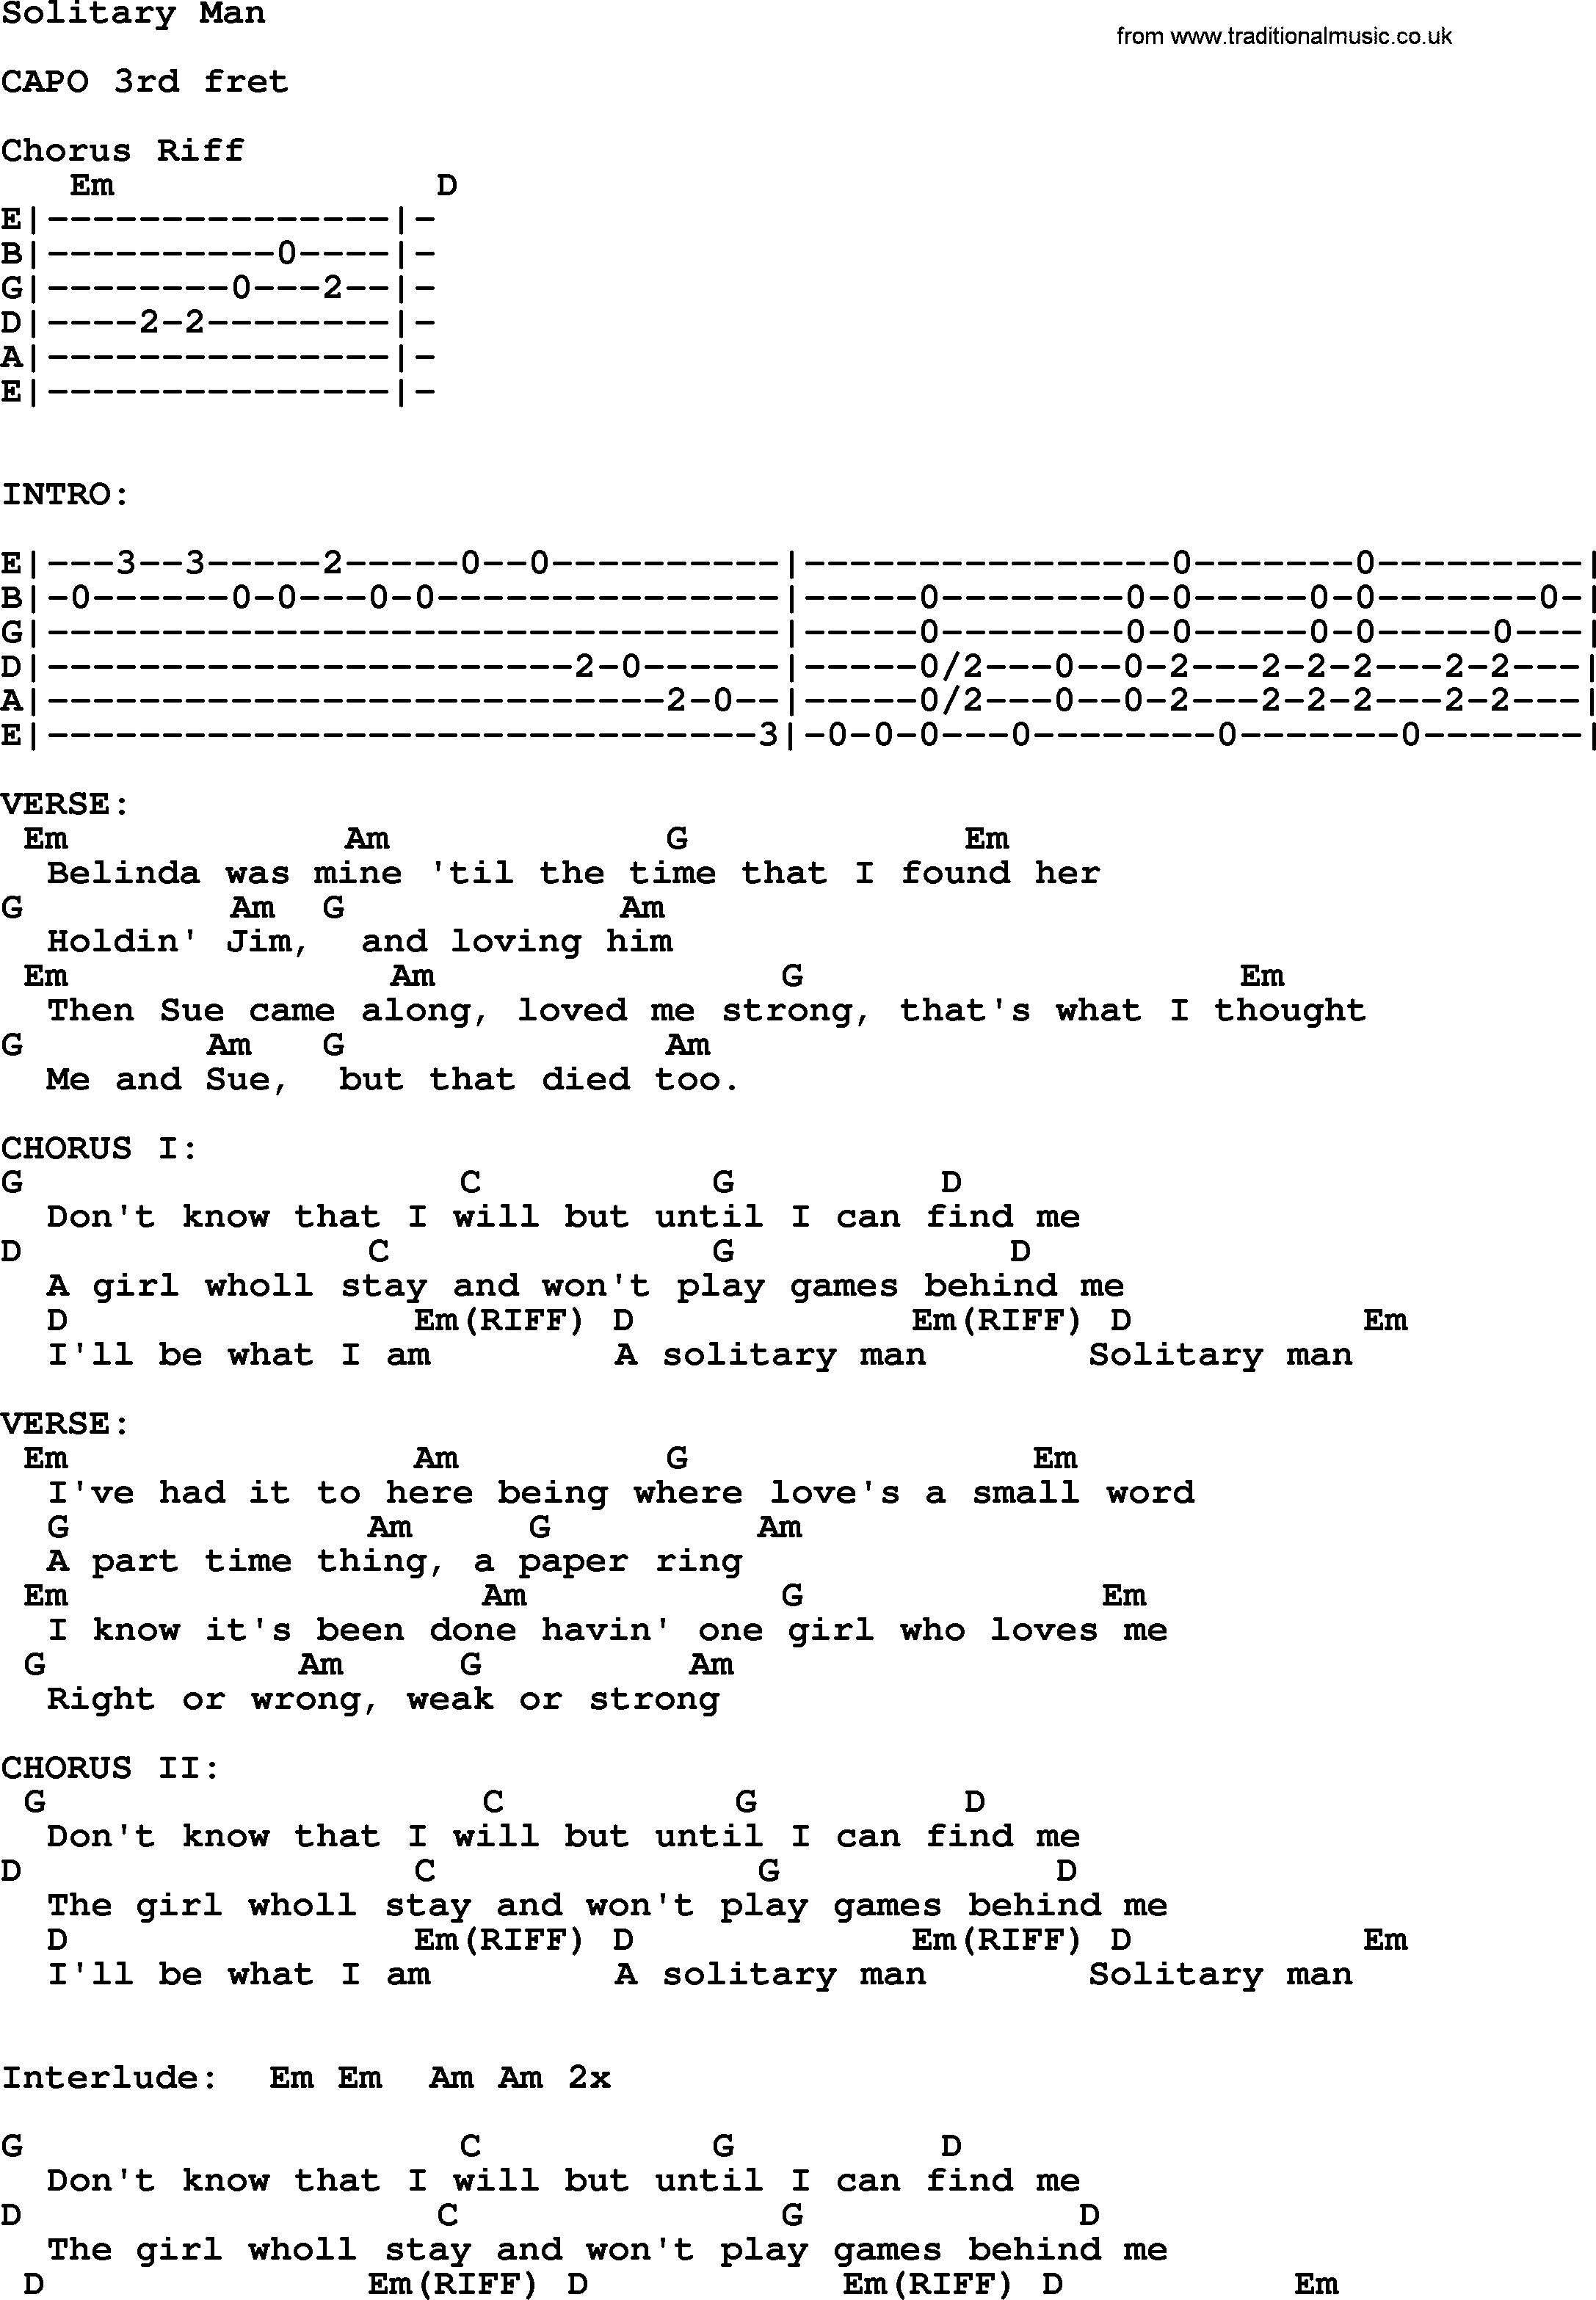 Johnny Cash song Solitary Man, lyrics and chords